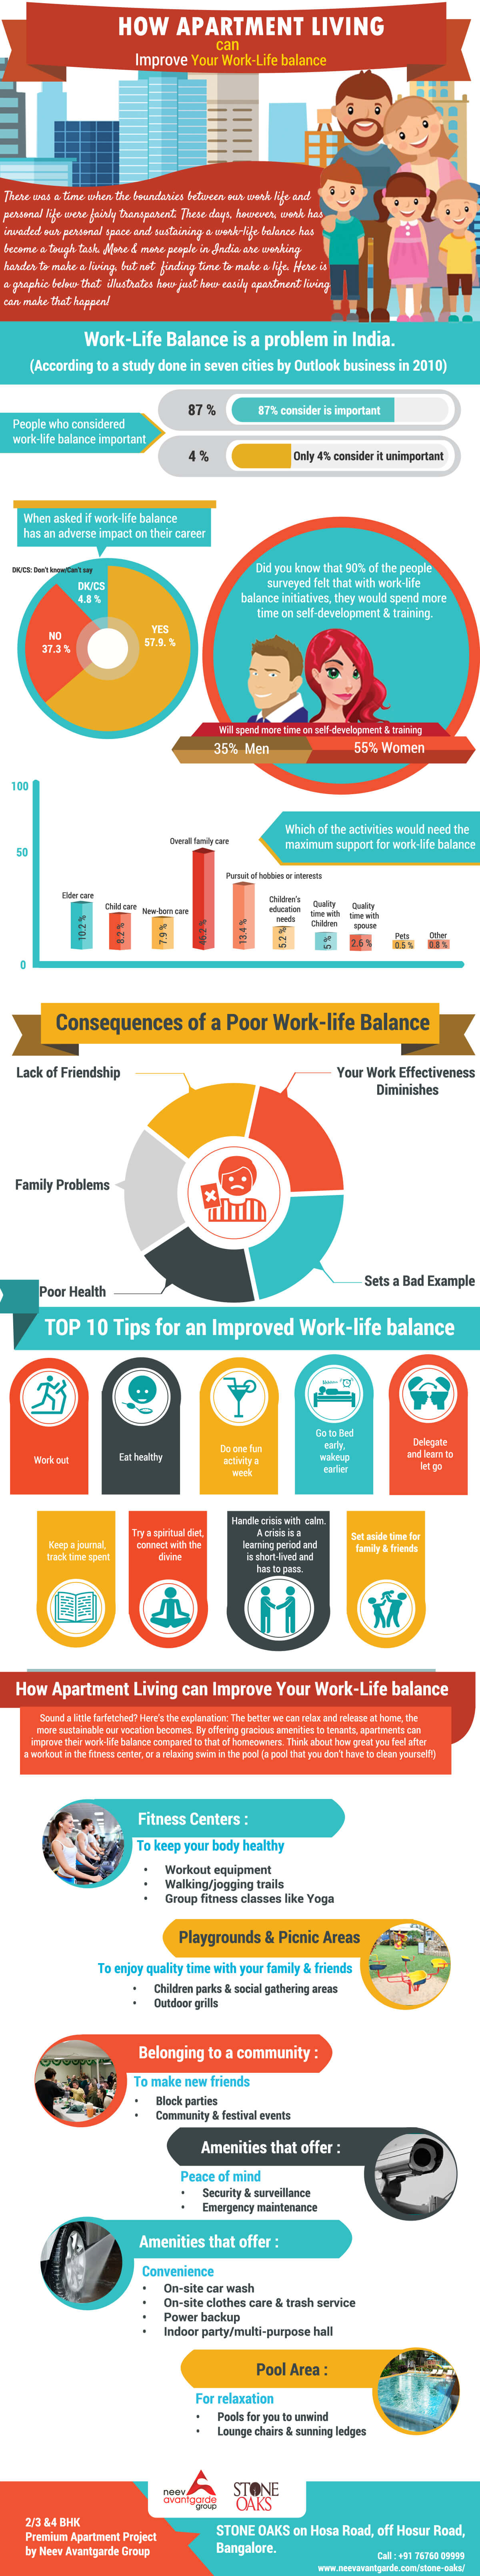 Apartment-Living-Work-Life-Balance-infographic-plaza